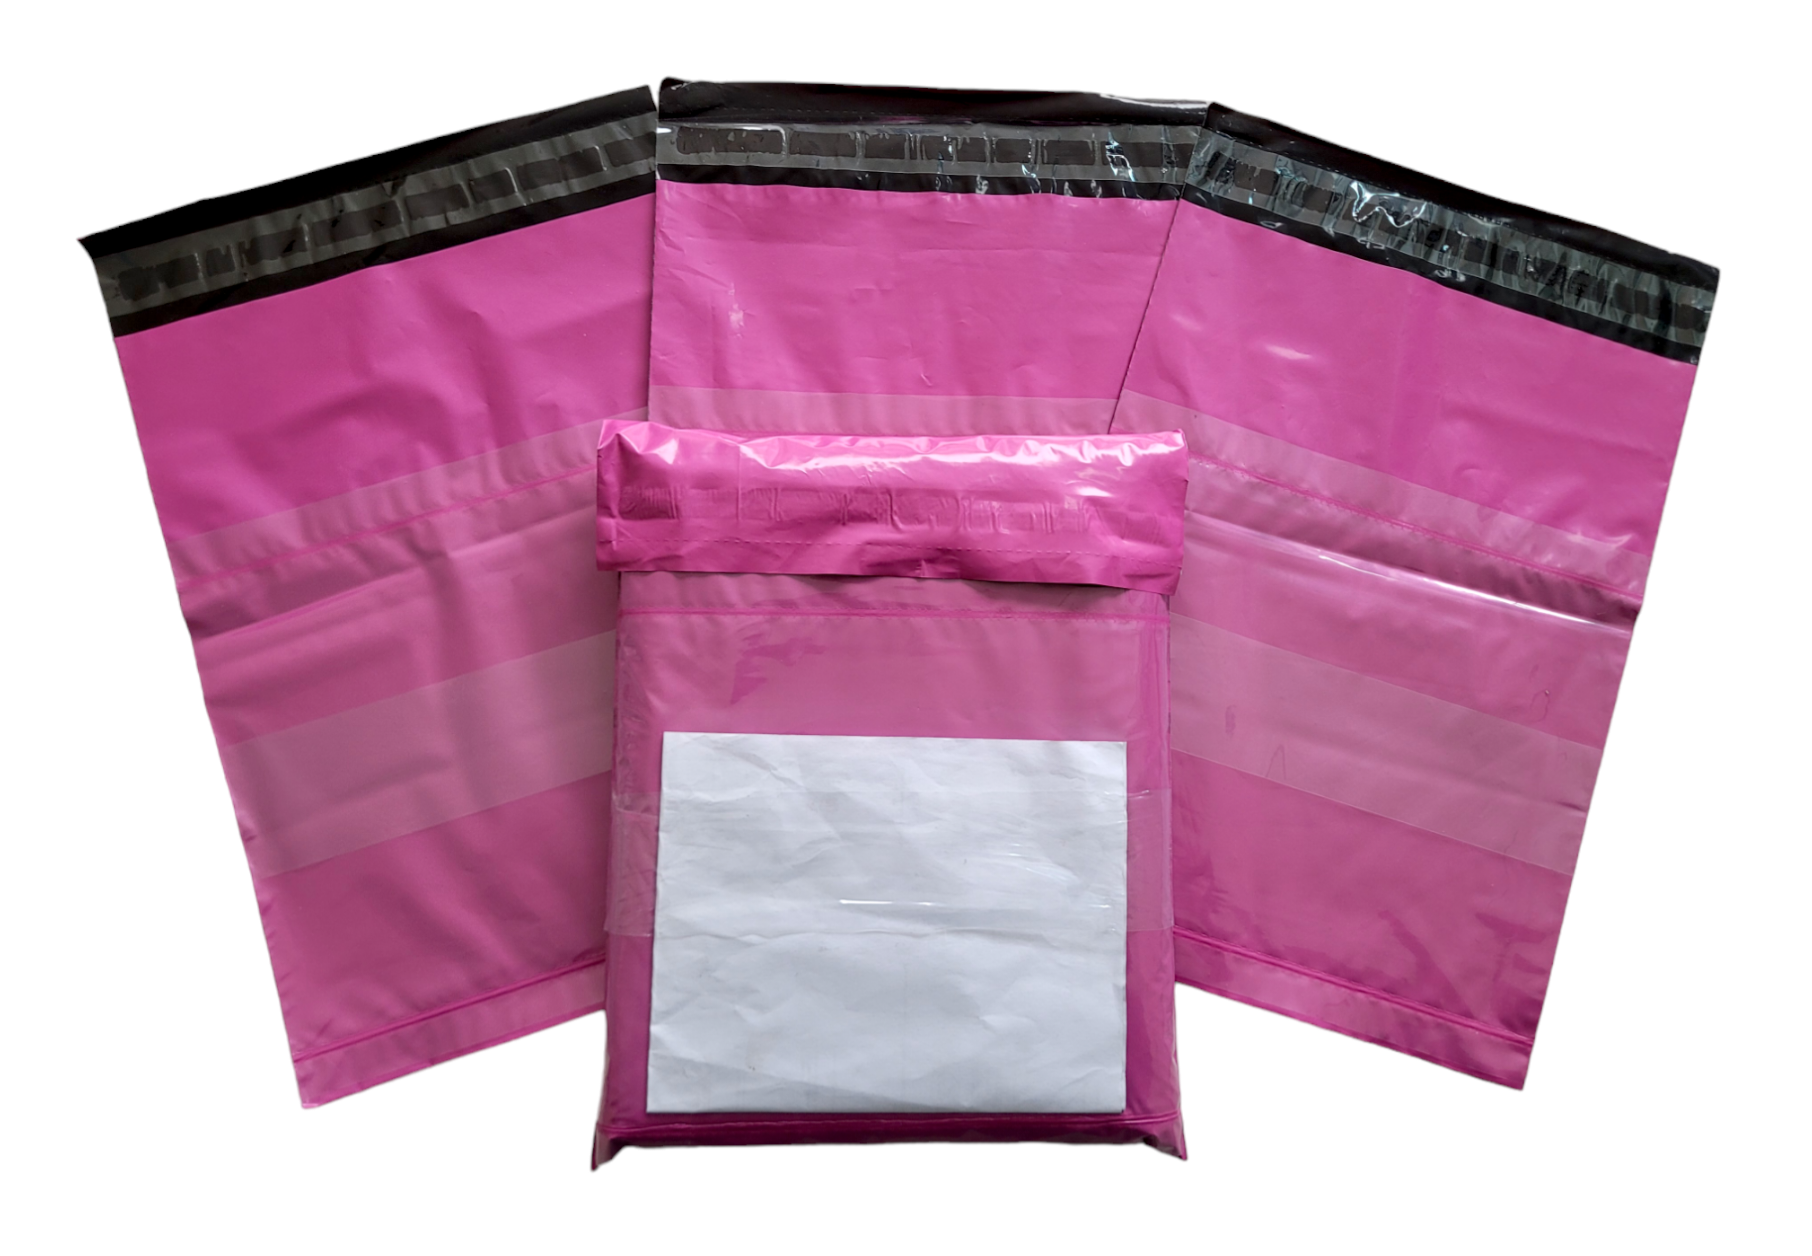 Bolsa De Seguridad Biodegradable Portaguia 43x45cm x 100 Unds Diferentes Colores